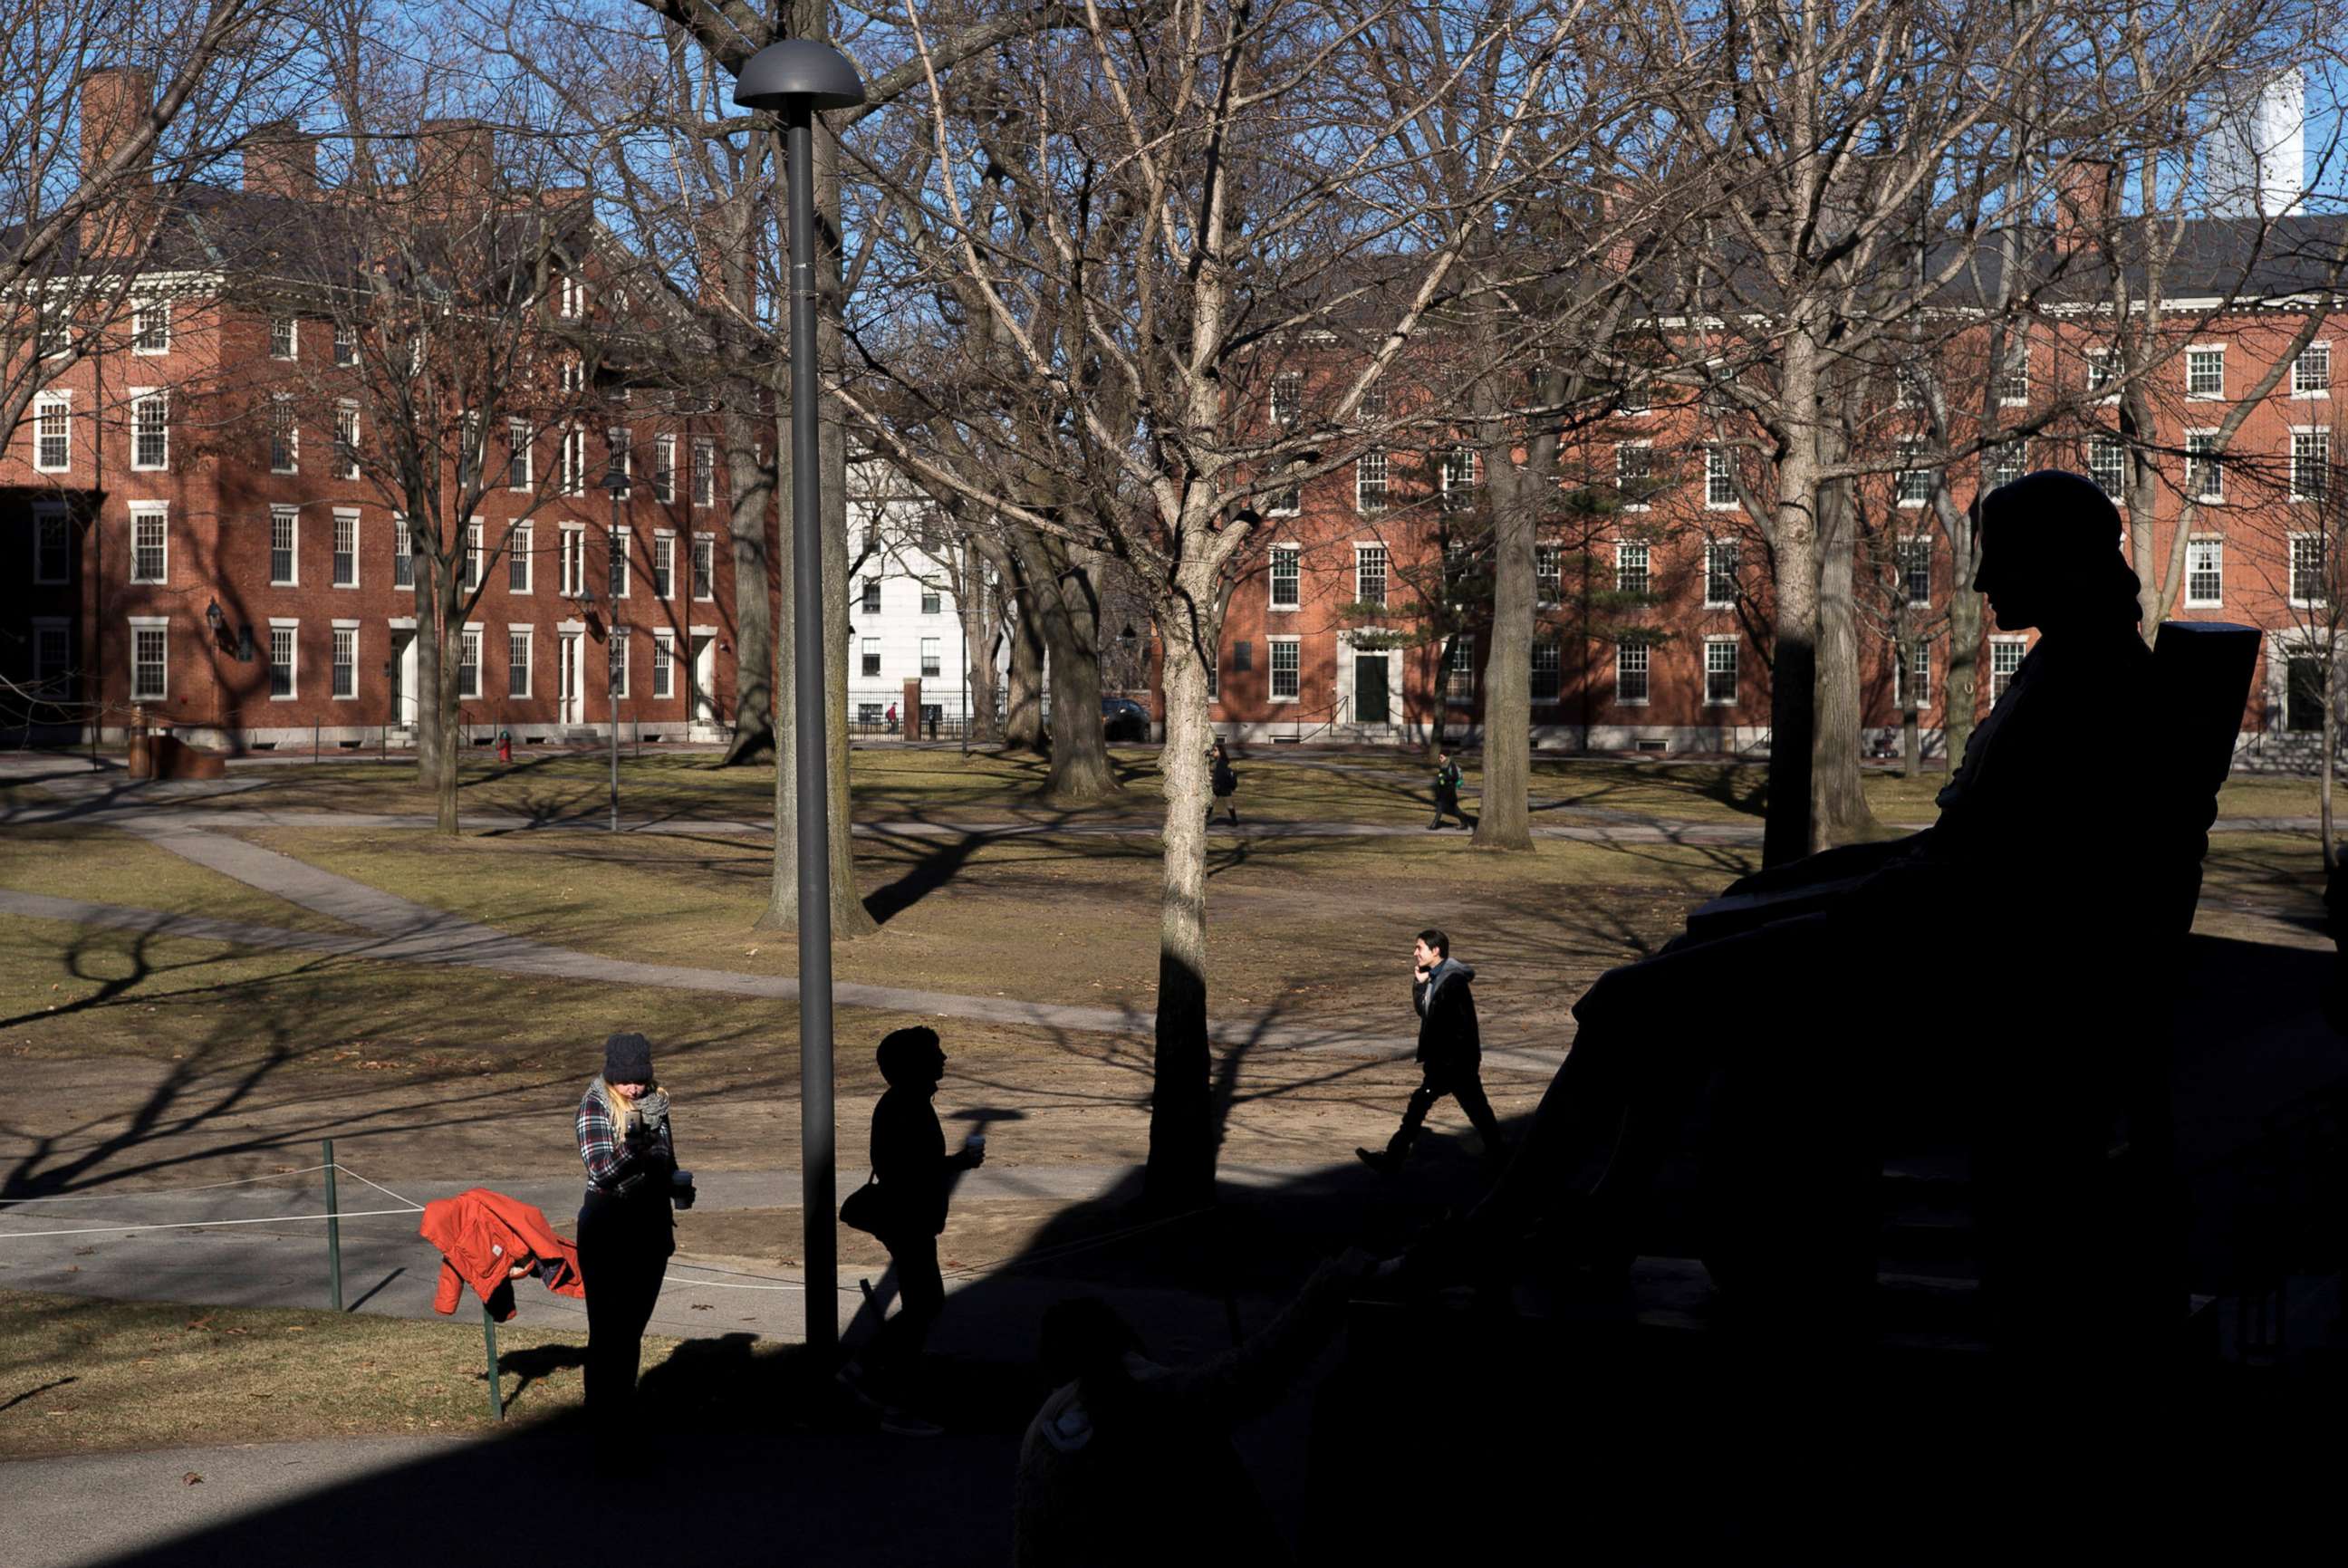 PHOTO: A statue of John Harvard looks over Harvard Yard at Harvard University in Cambridge, Mass., Jan. 20, 2015.